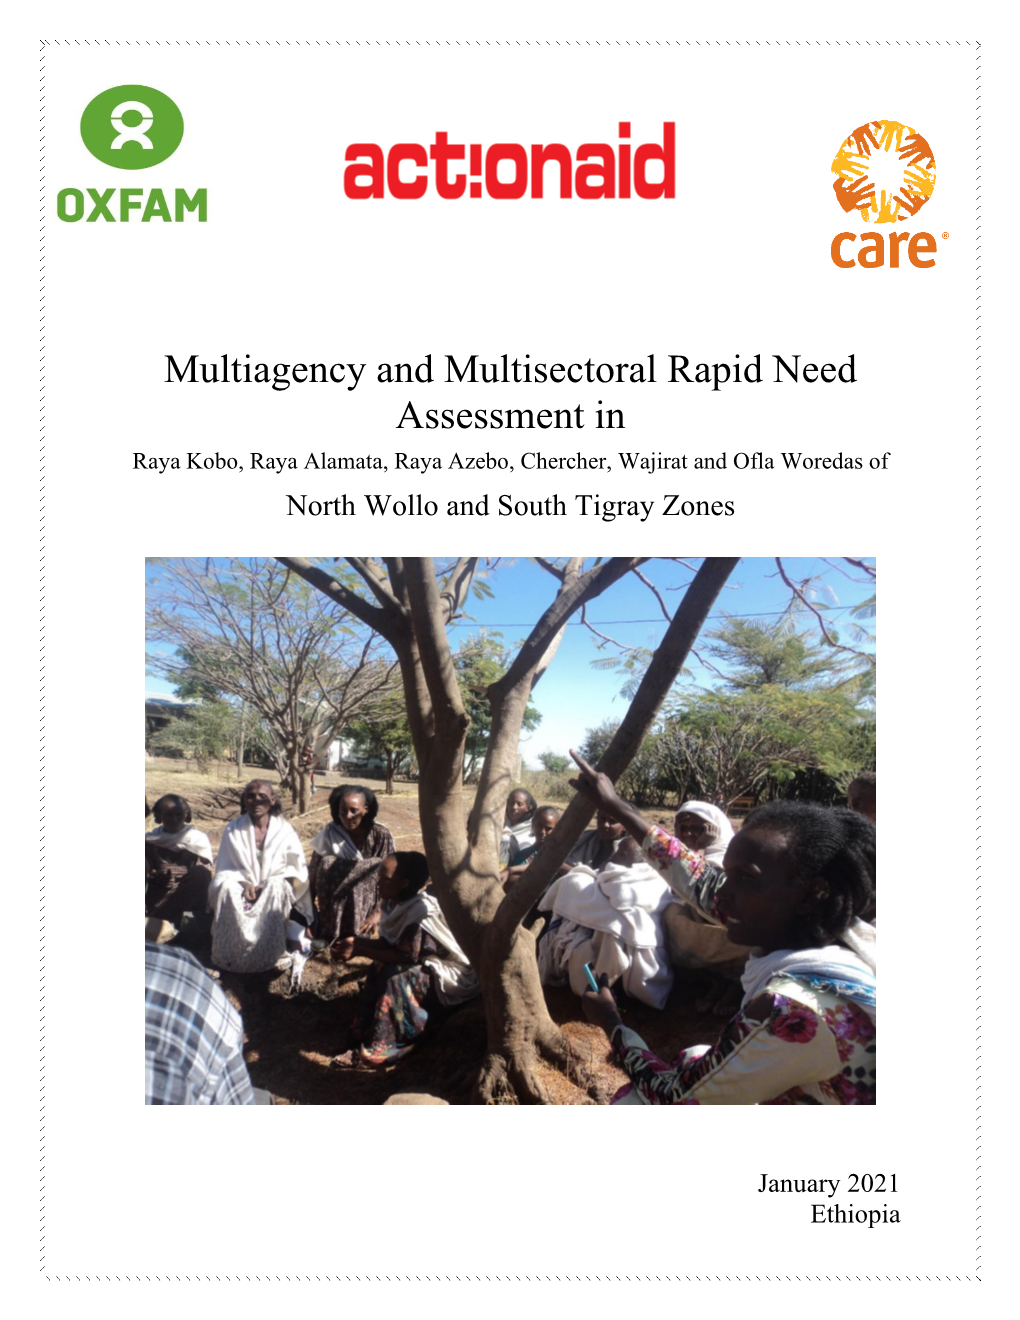 Multiagency and Multisectoral Rapid Need Assessment in Raya Kobo, Raya Alamata, Raya Azebo, Chercher, Wajirat and Ofla Woredas of North Wollo and South Tigray Zones